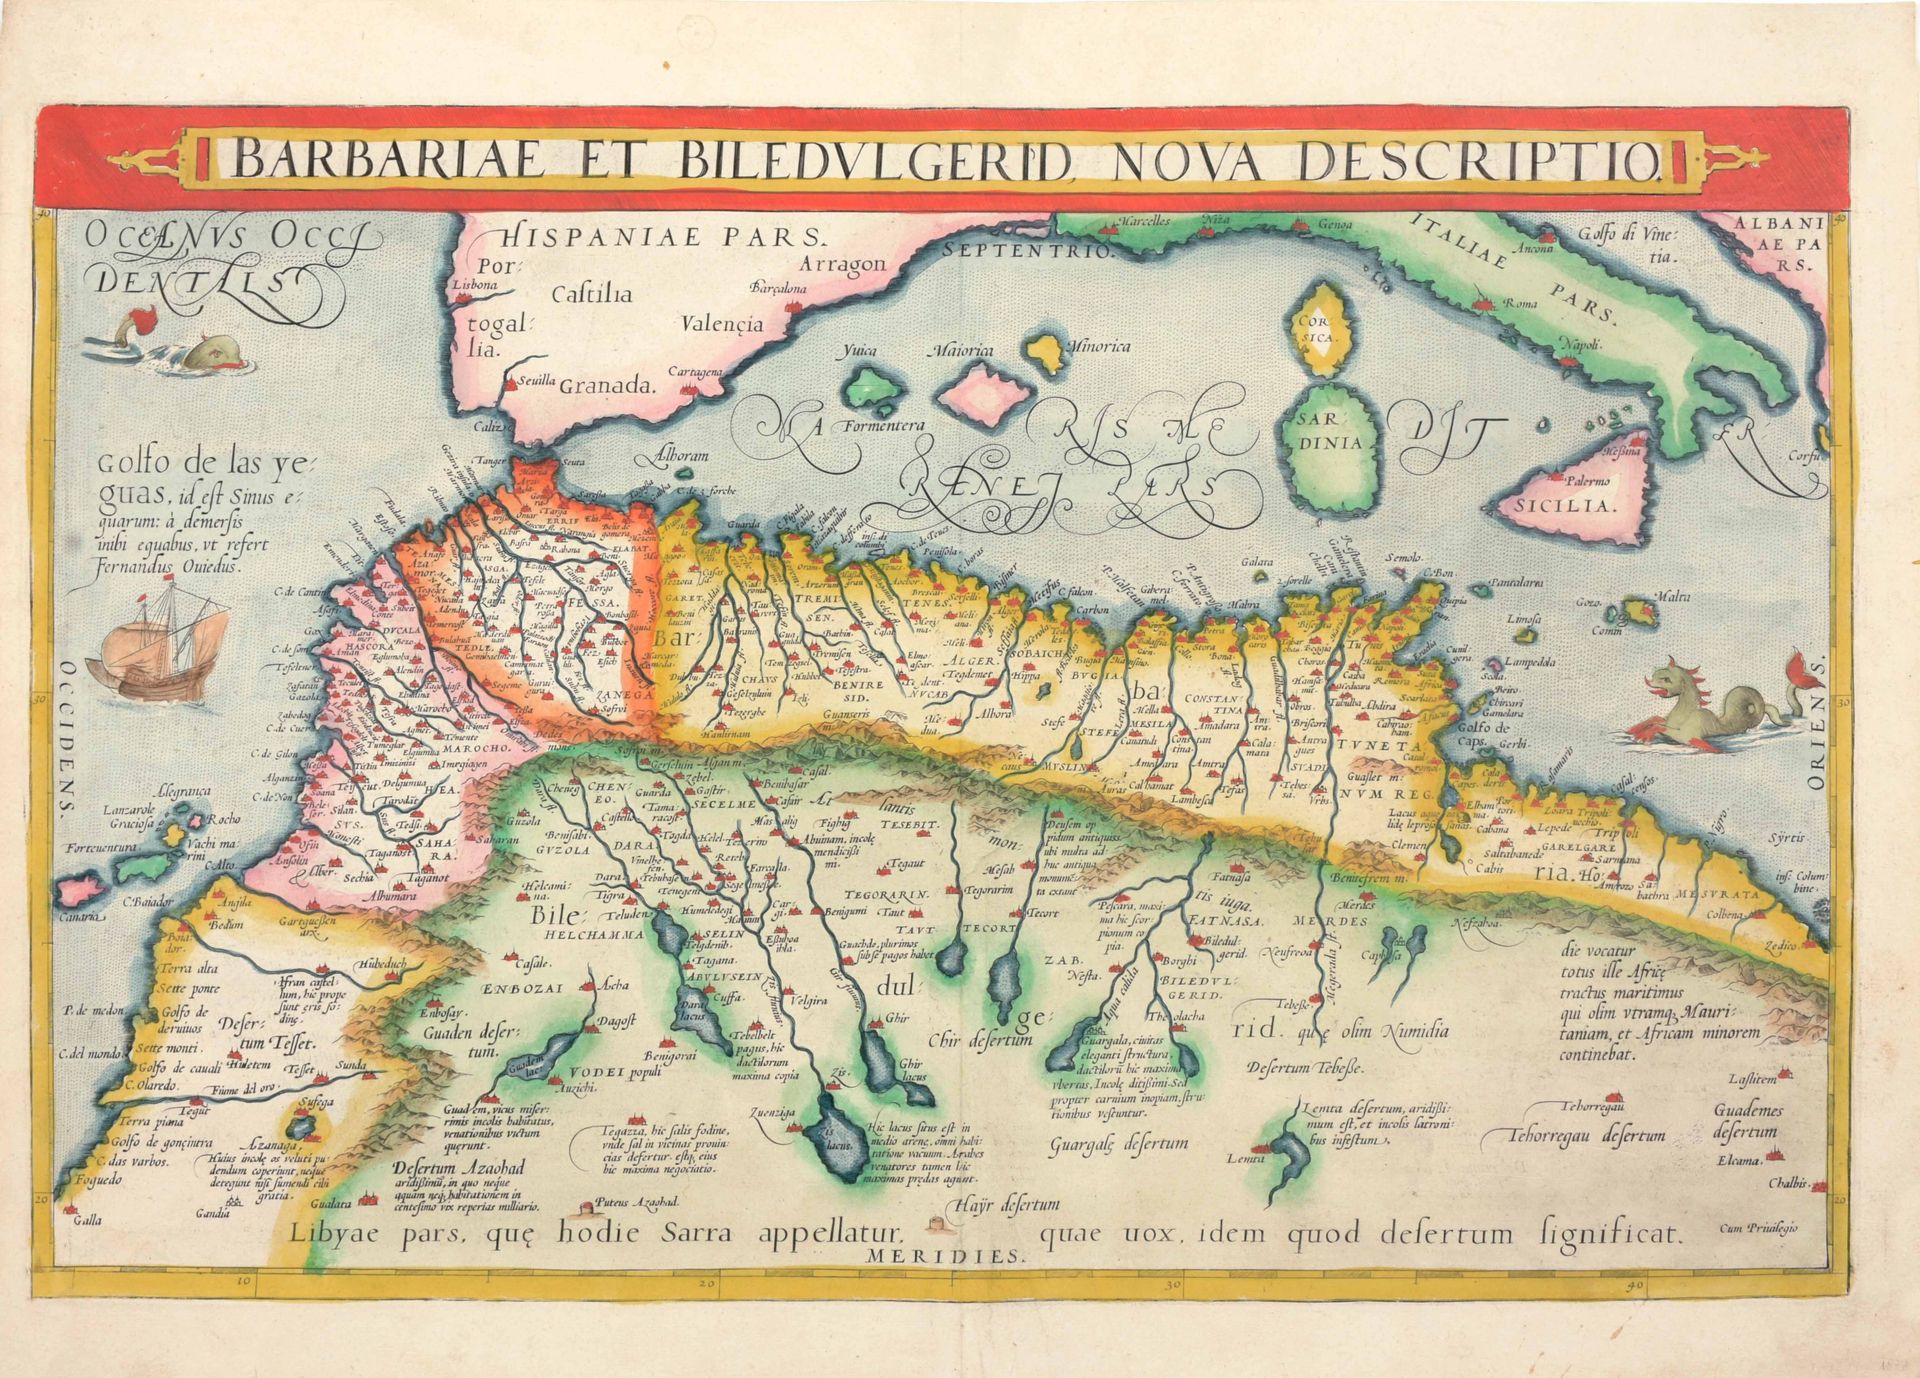 [NORTH AFRICA] Barbariae et Biledvlgerid nova descriptio

Handkolorierte Karte (&hellip;